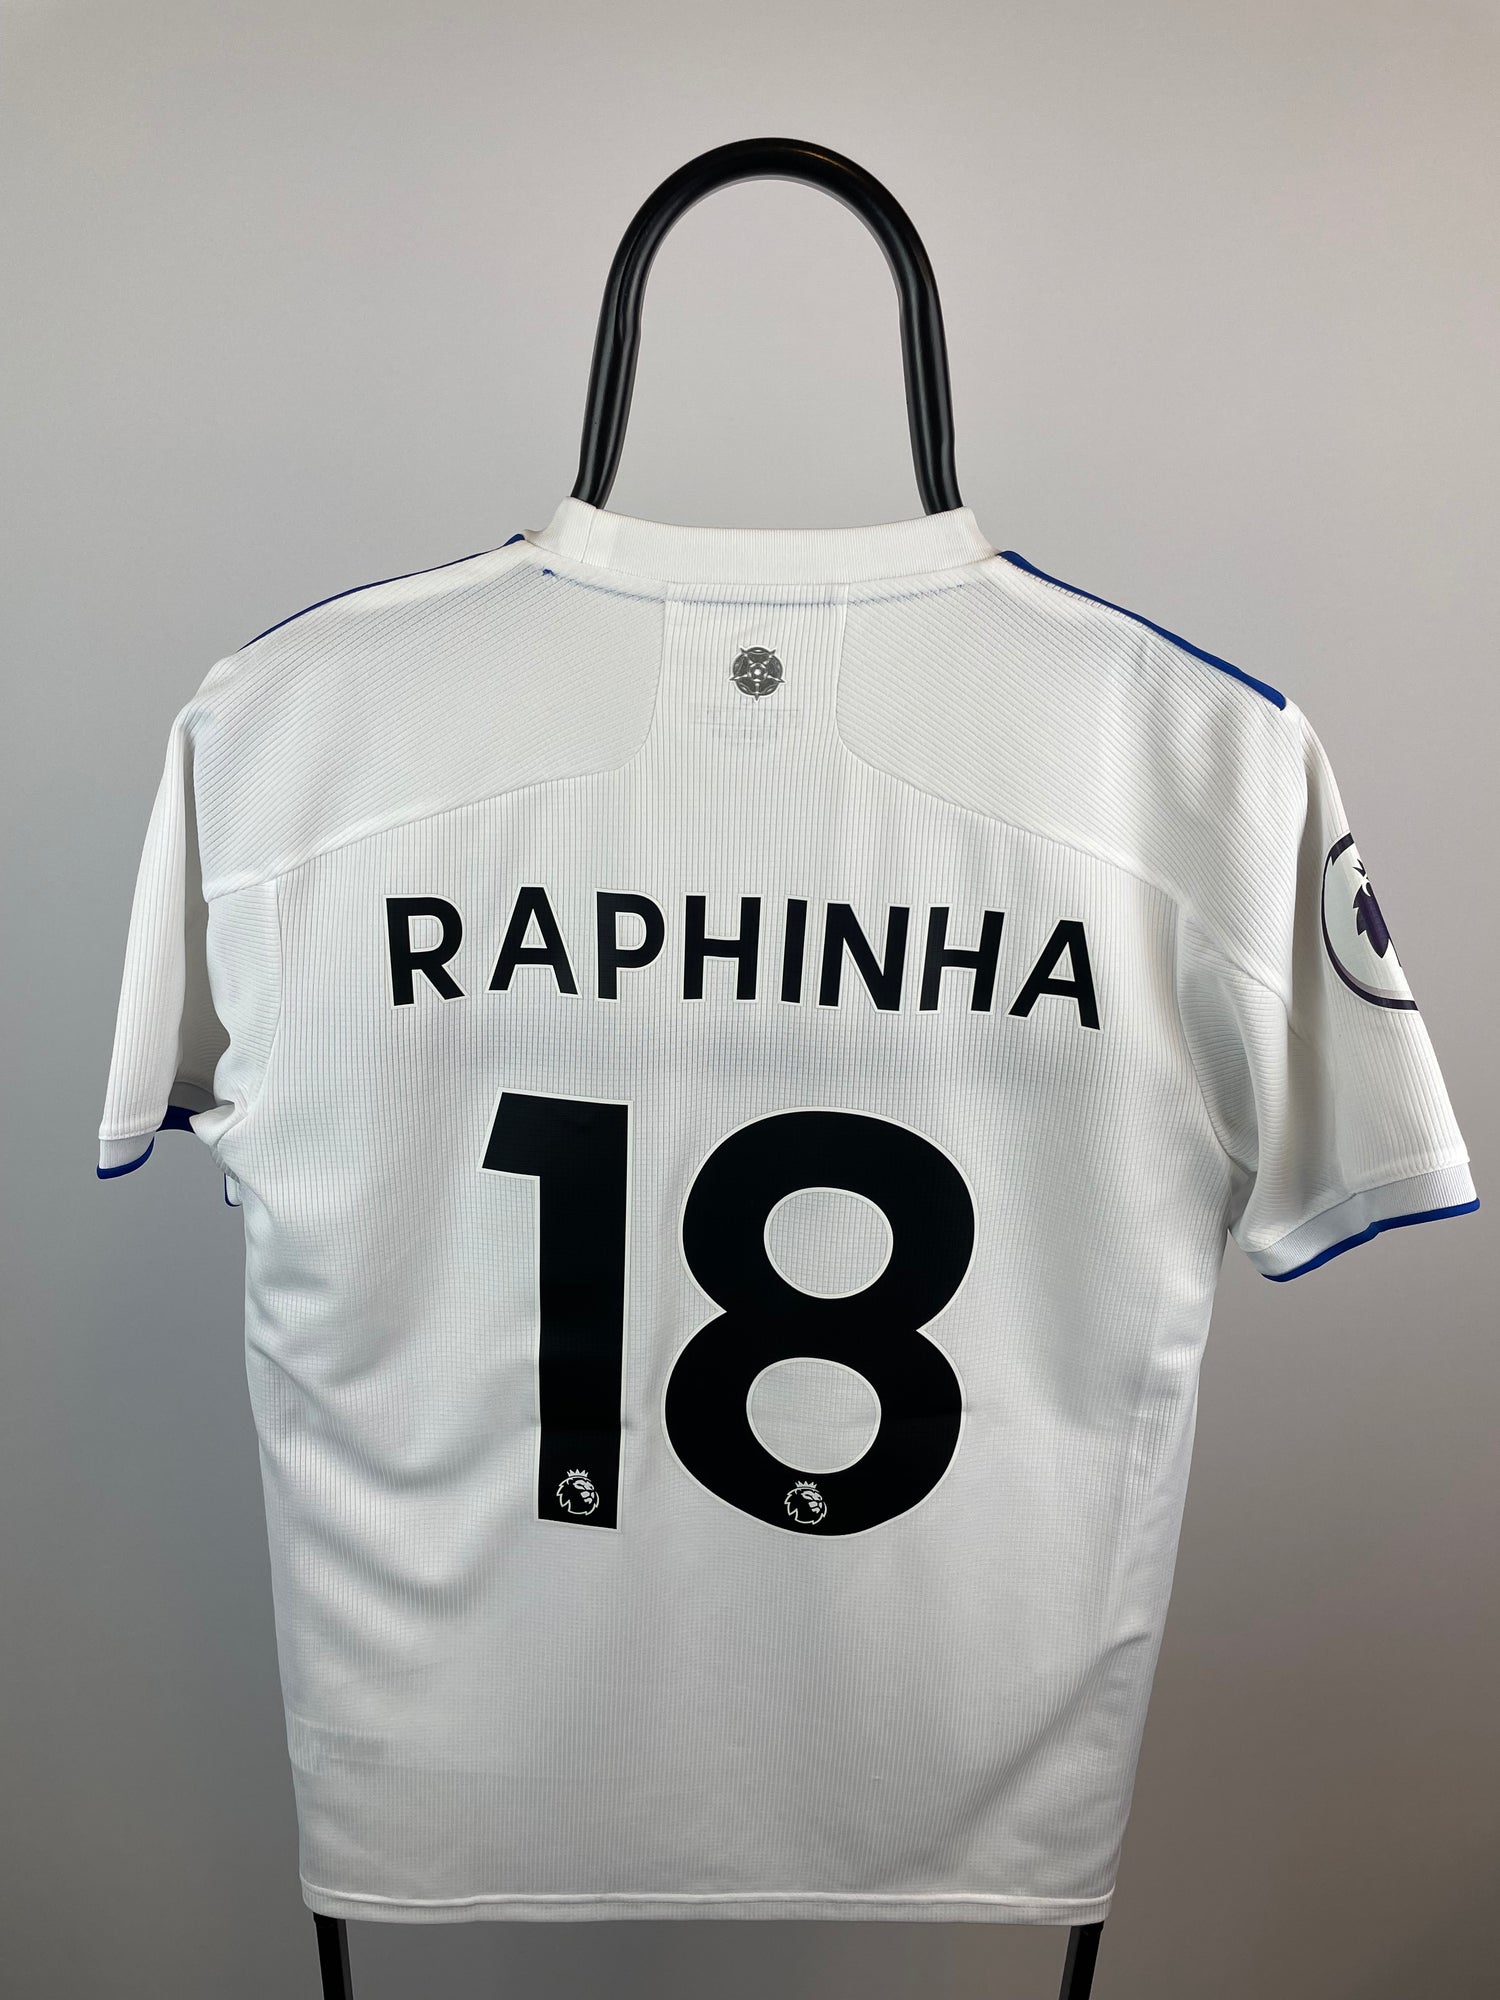 Raphinha Leeds 20/21 hjemmebanetrøje - S